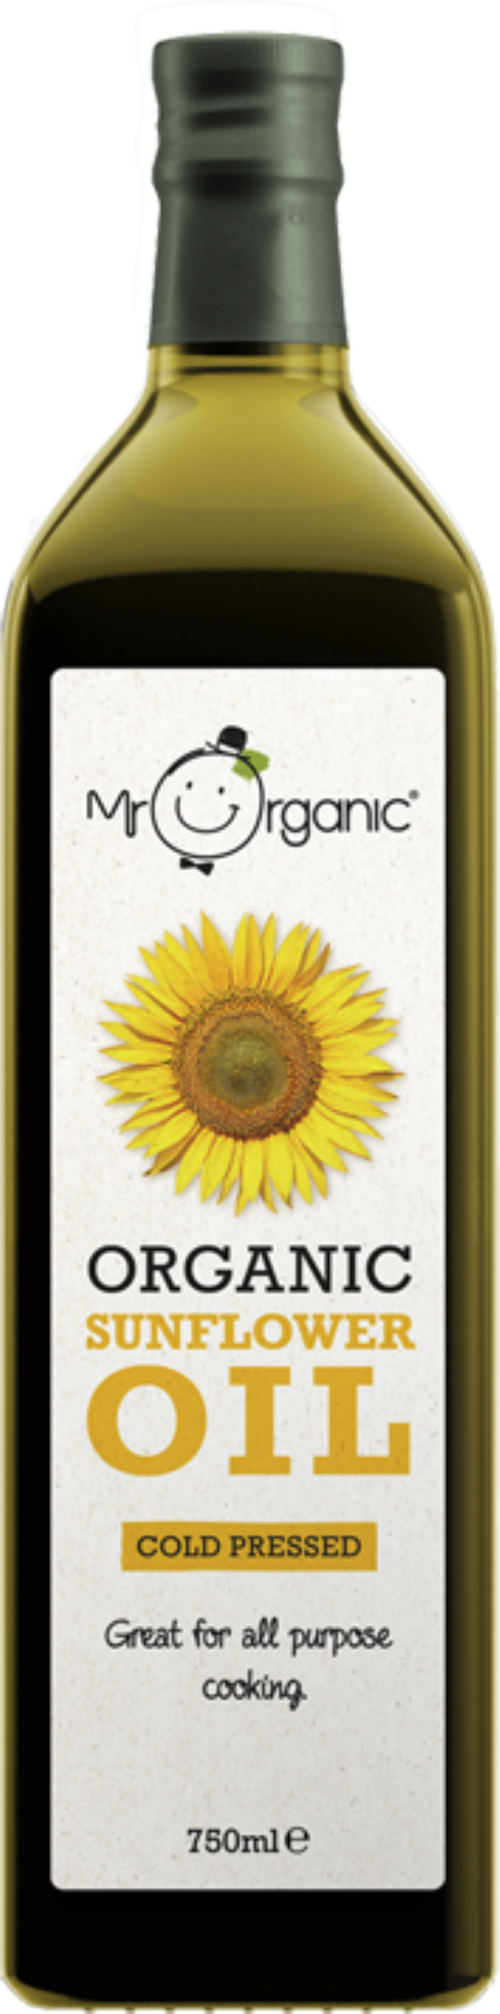 MR ORGANIC Organic Sunflower Oil 750ml